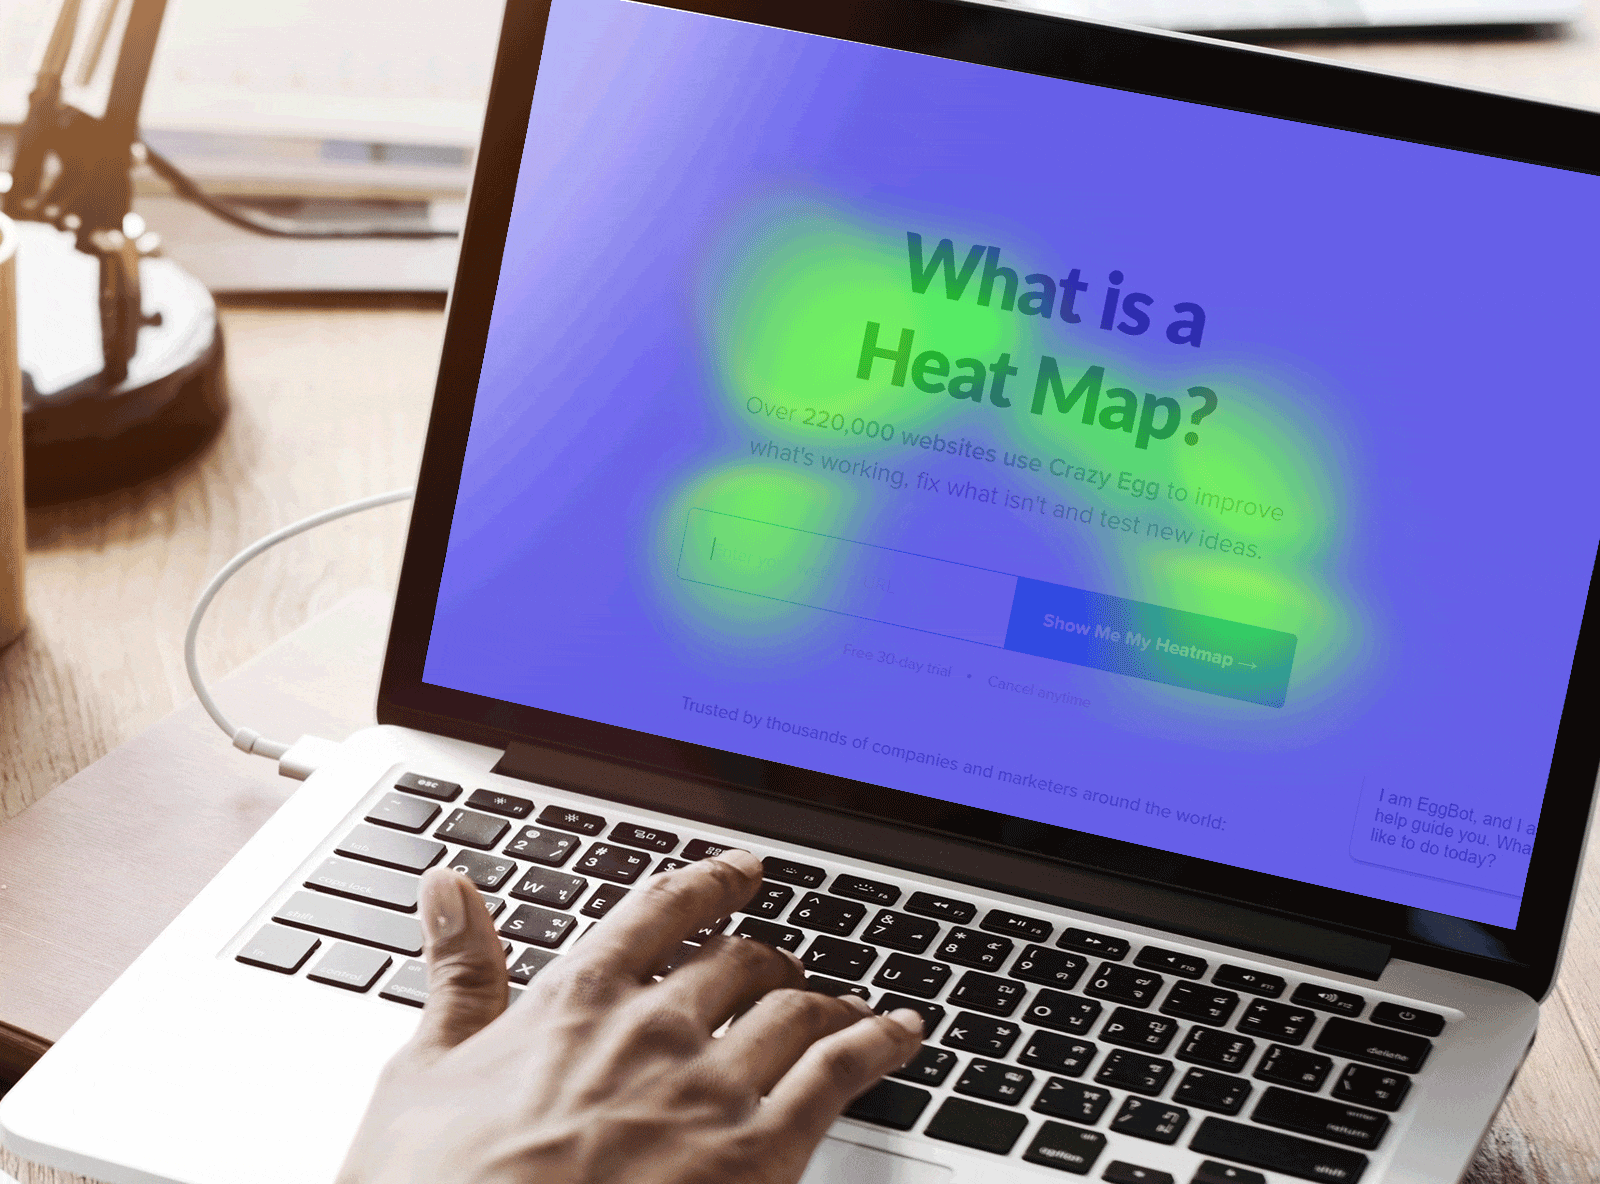 Case Studies: Successful Site Changes Based on Heatmap Data